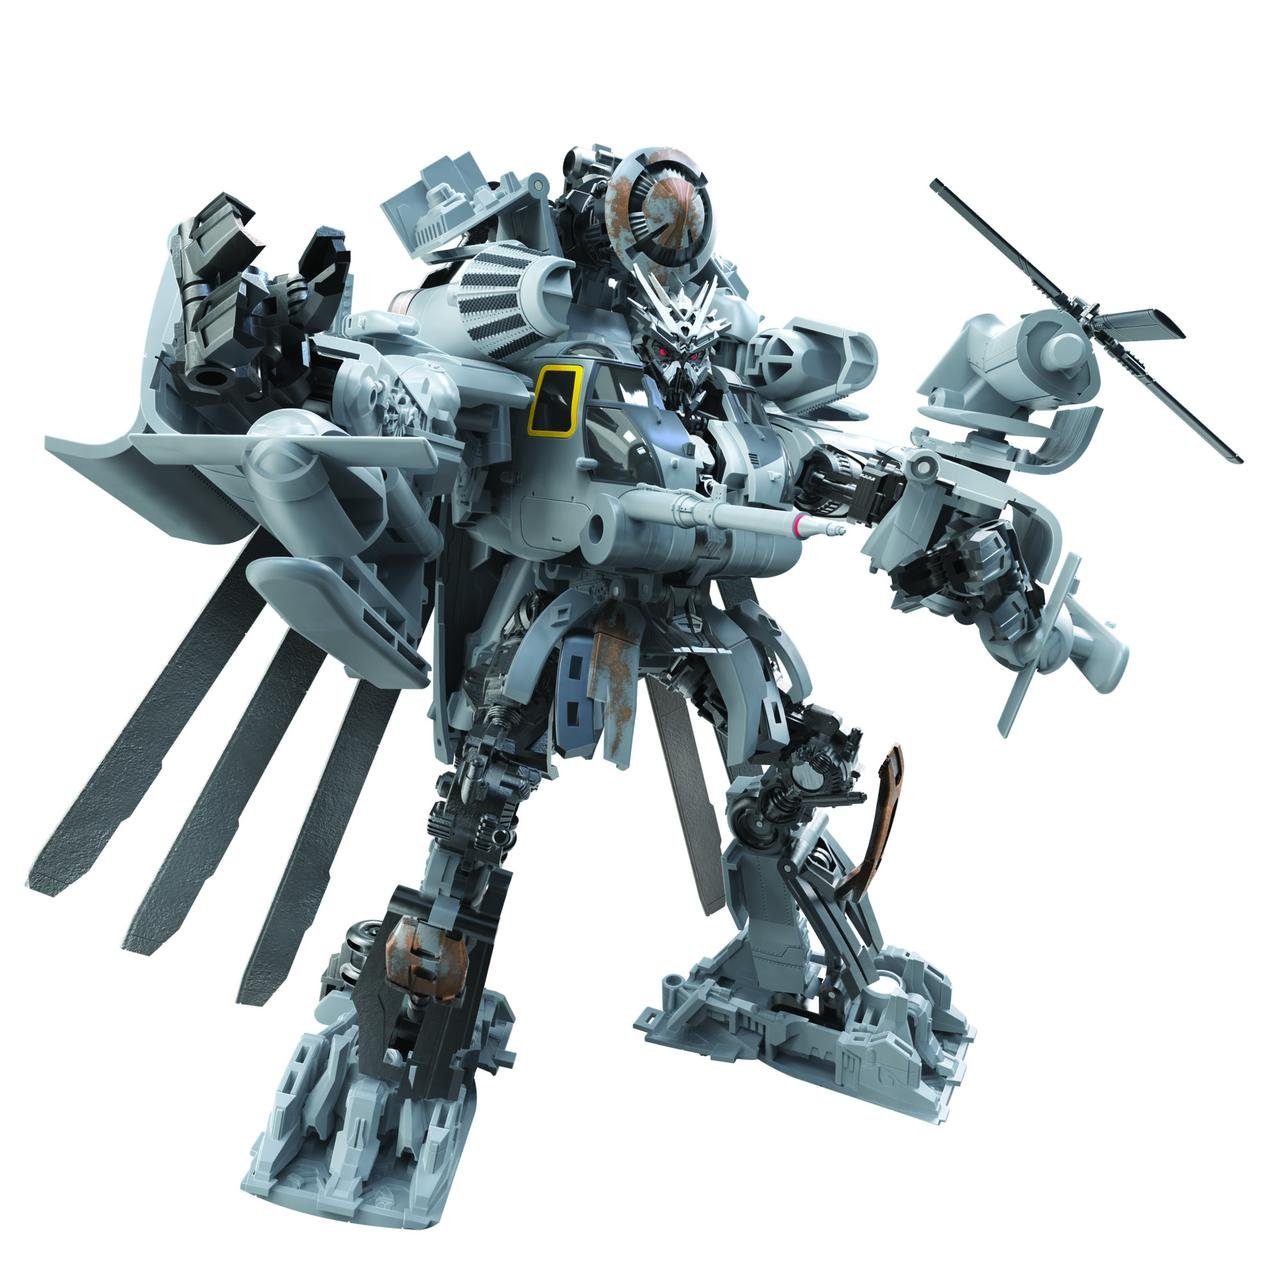 GRINDOR Actionfigur Series Studio Kulisse - Transformers RAVAGE Hasbro & - inklusive